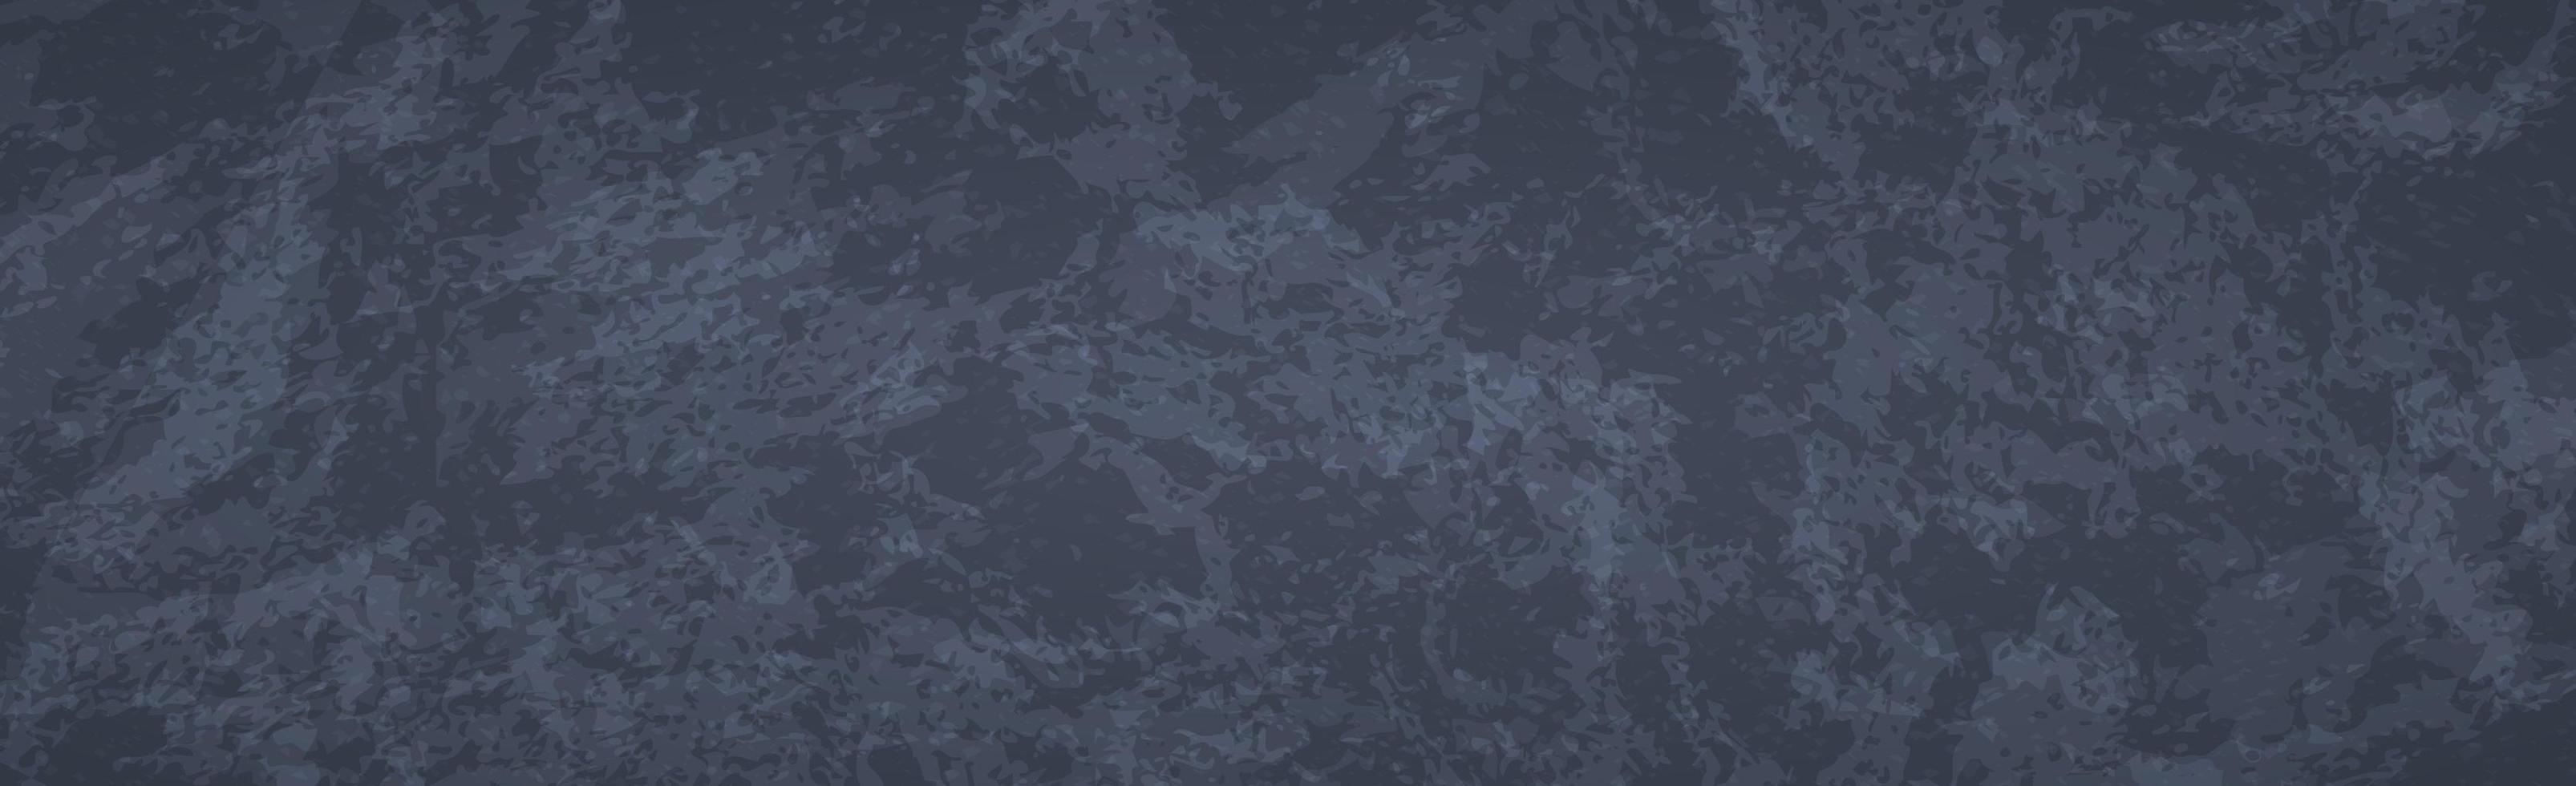 Panoramic abstract textured dark grunge background - Vector